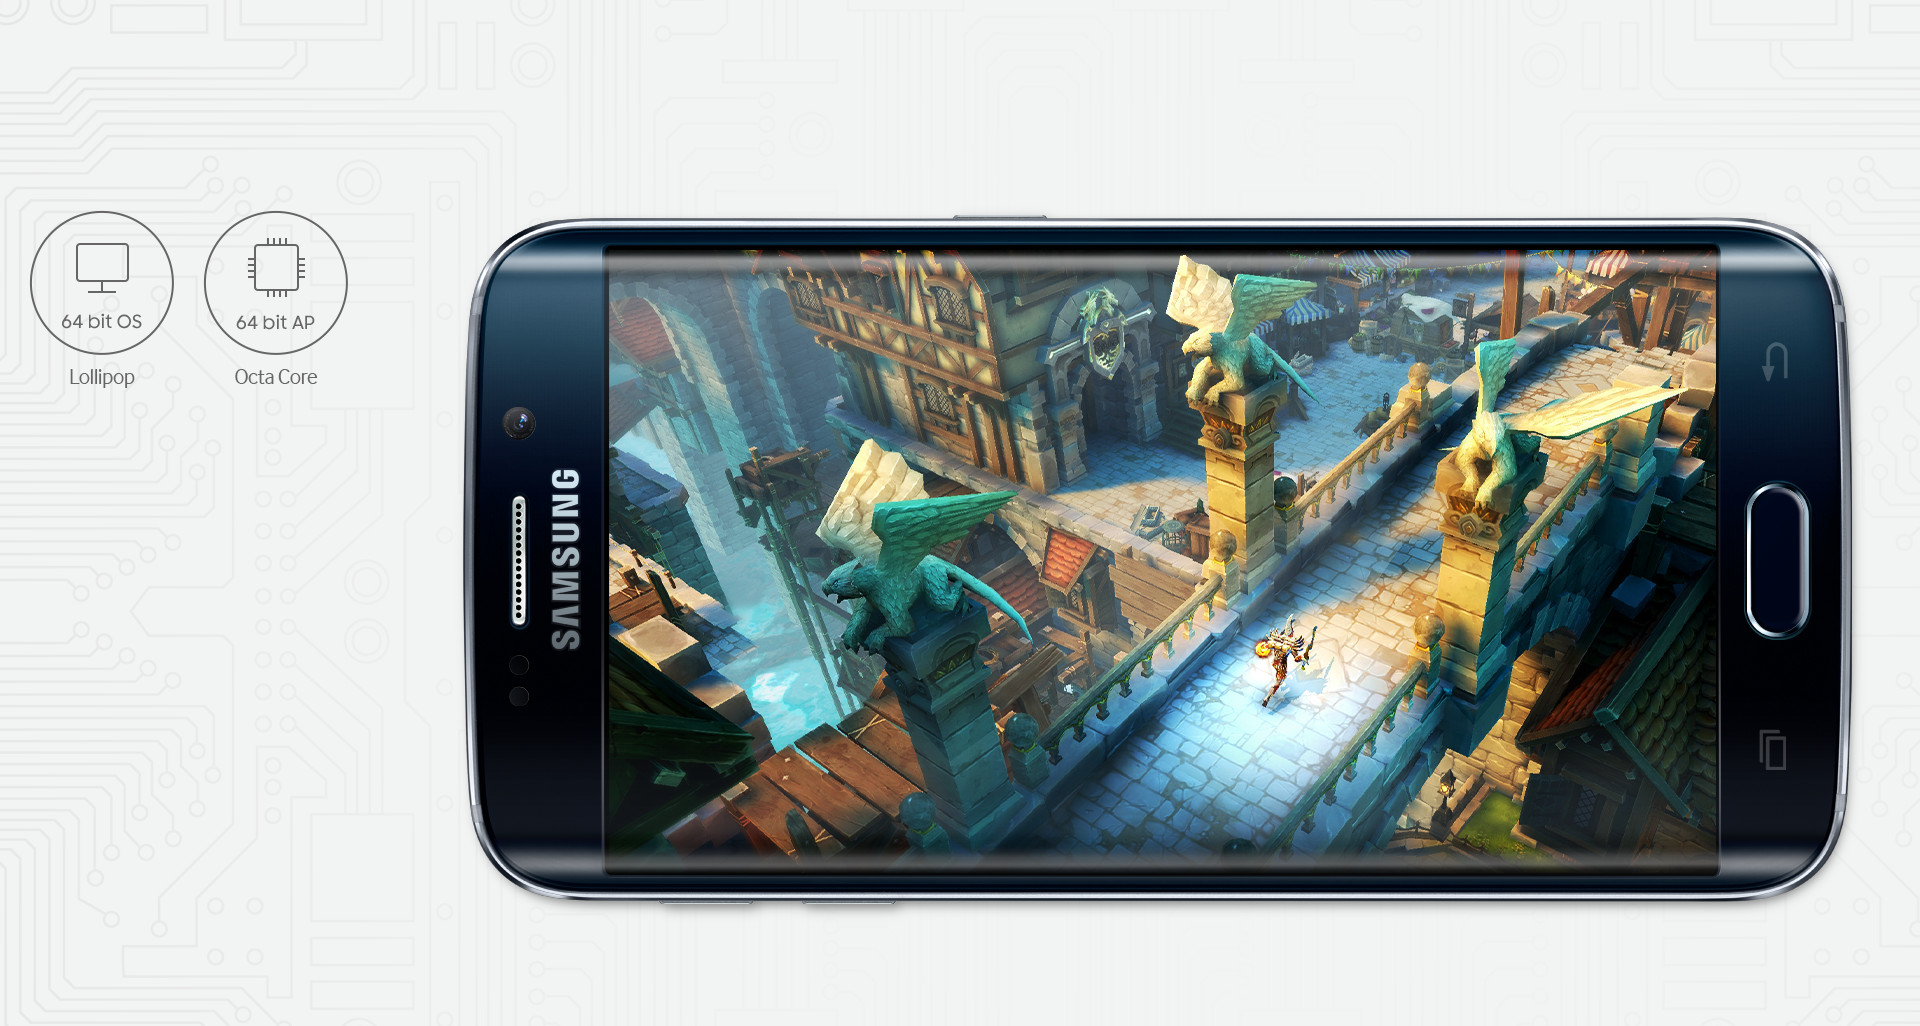 Samsung Galaxy S6 display